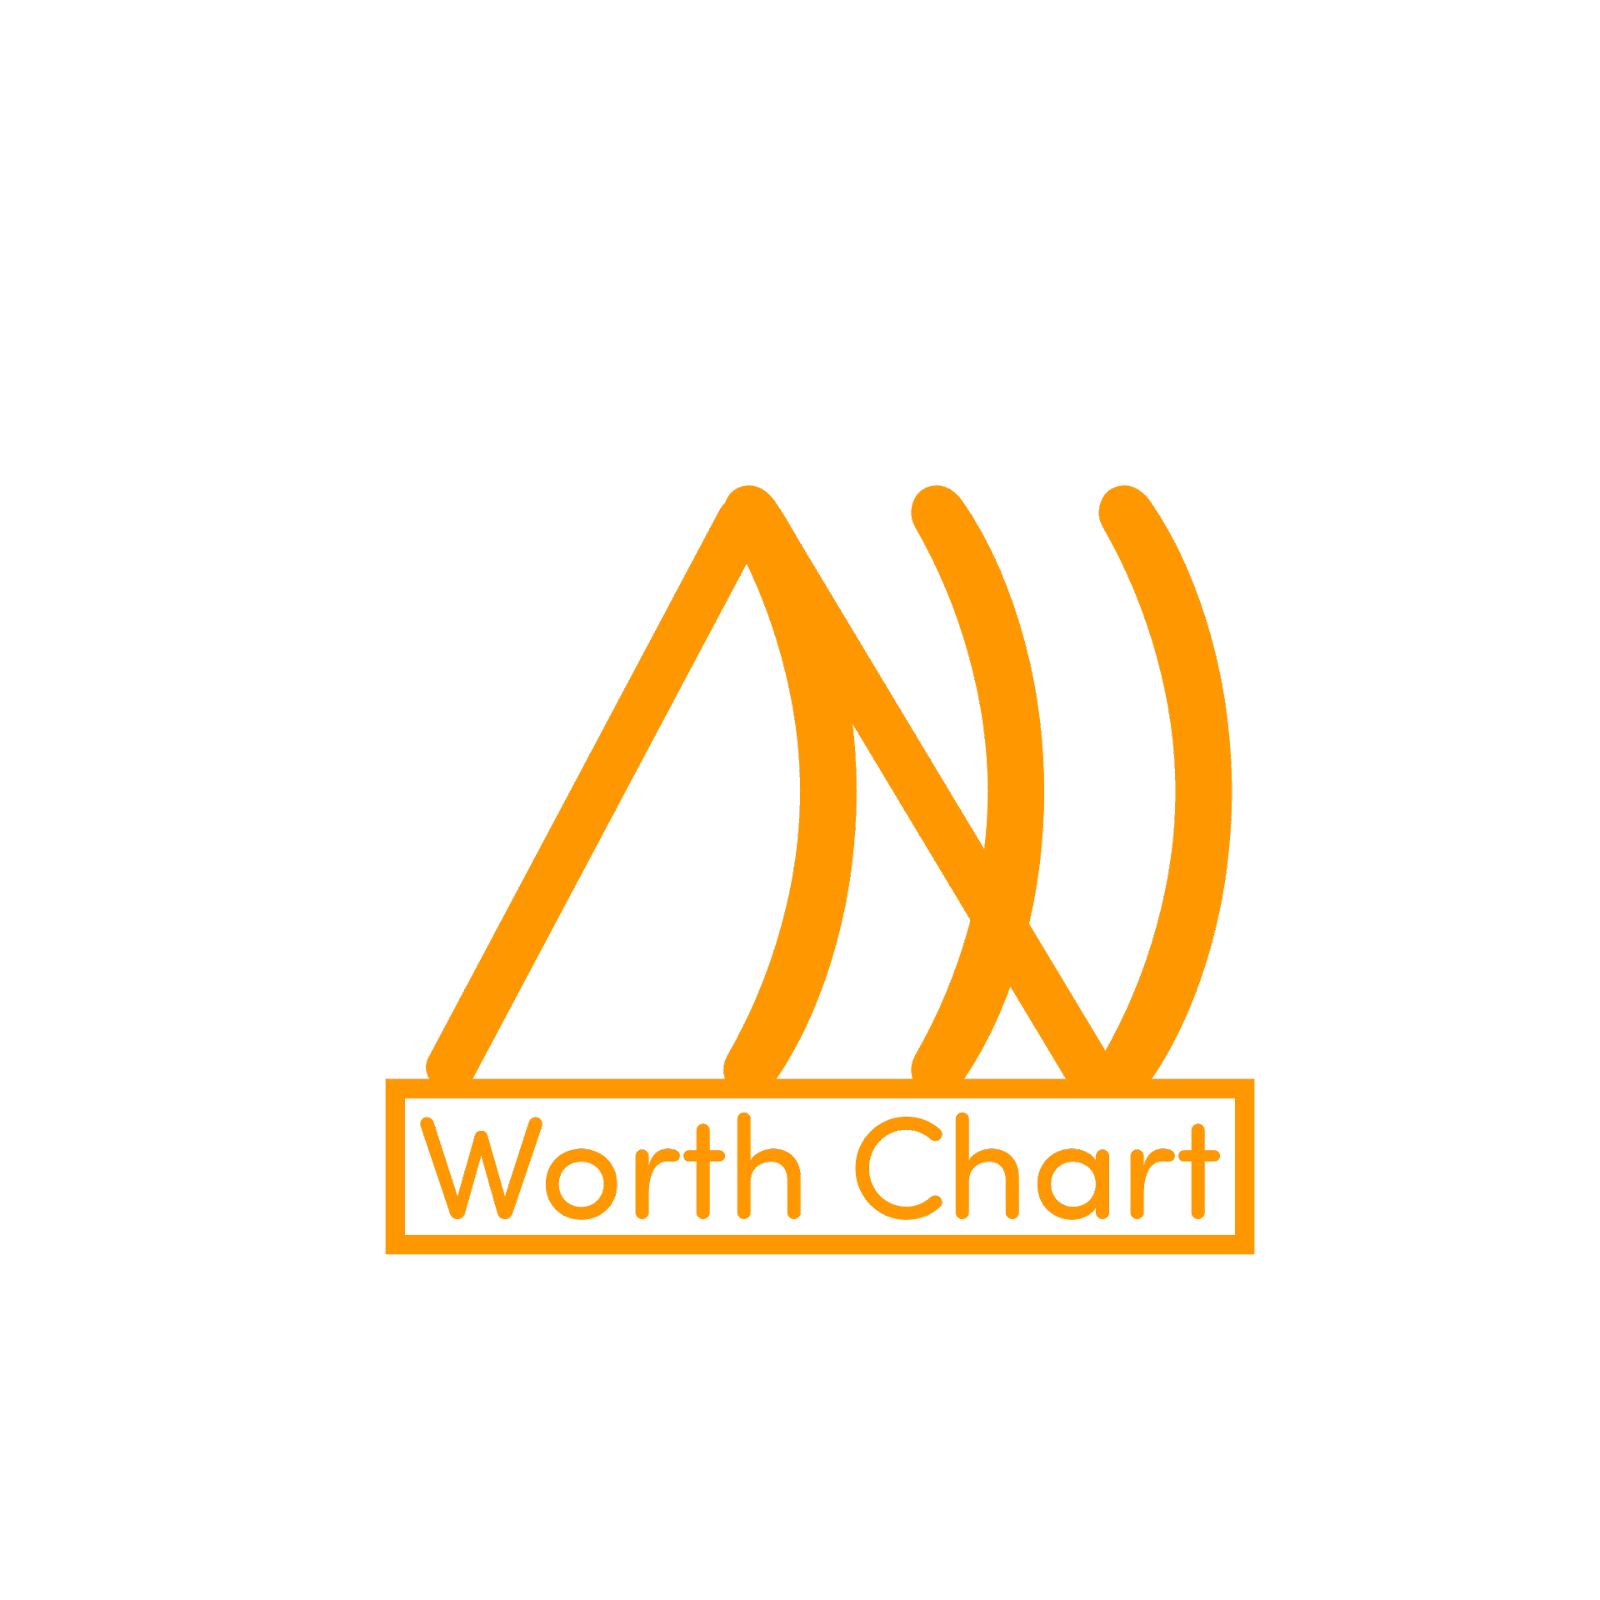 WorthChart